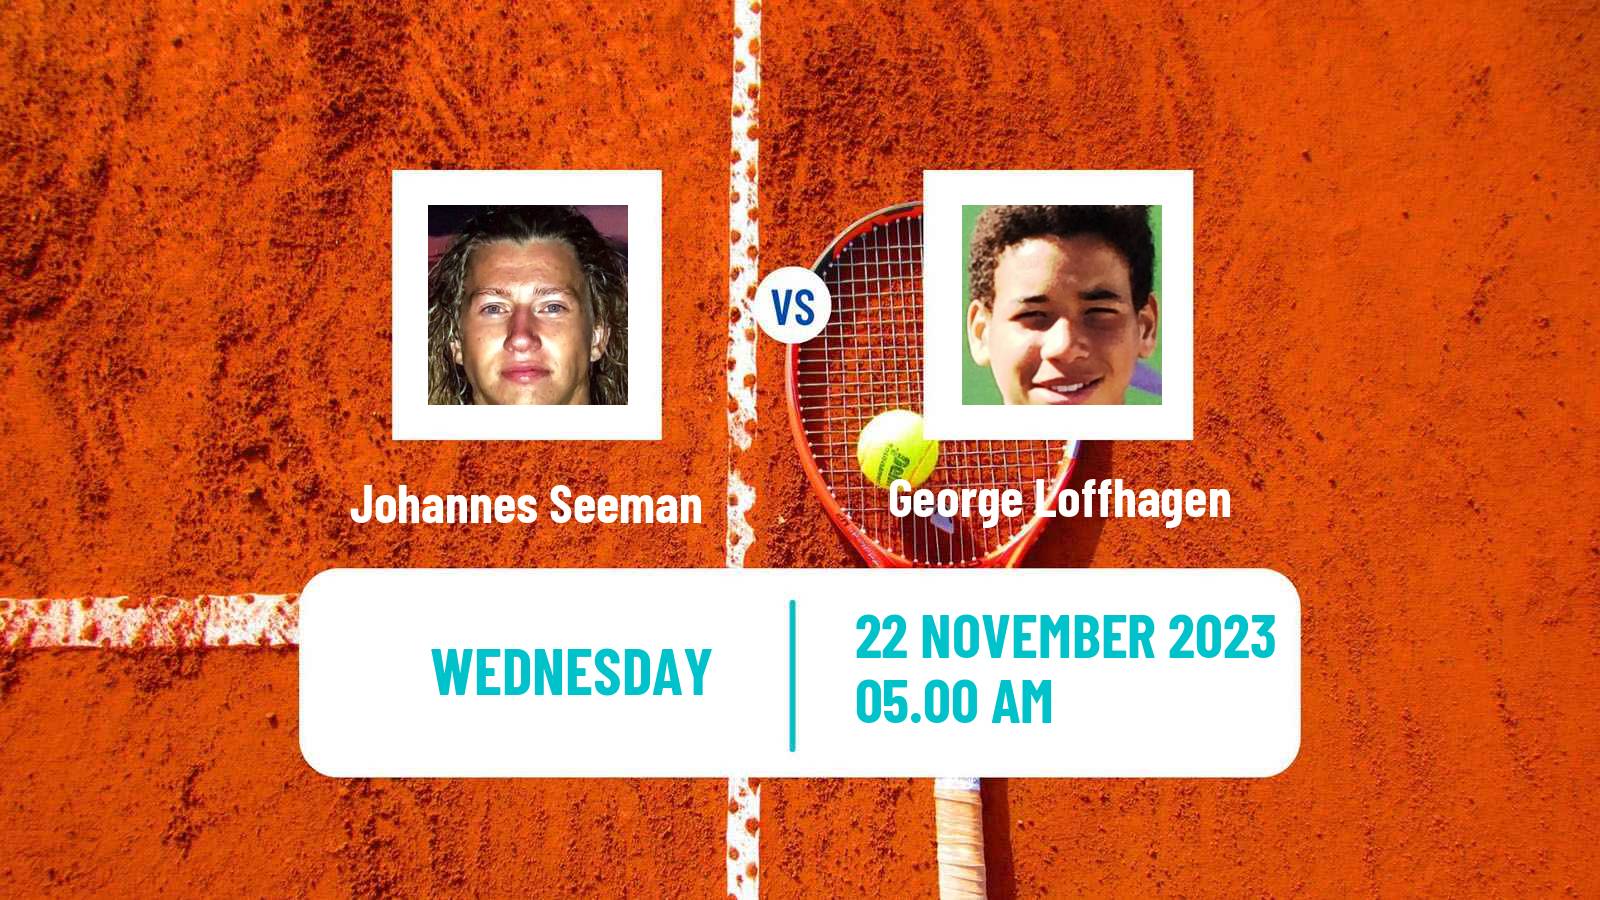 Tennis ITF M25 Vale Do Lobo 2 Men Johannes Seeman - George Loffhagen